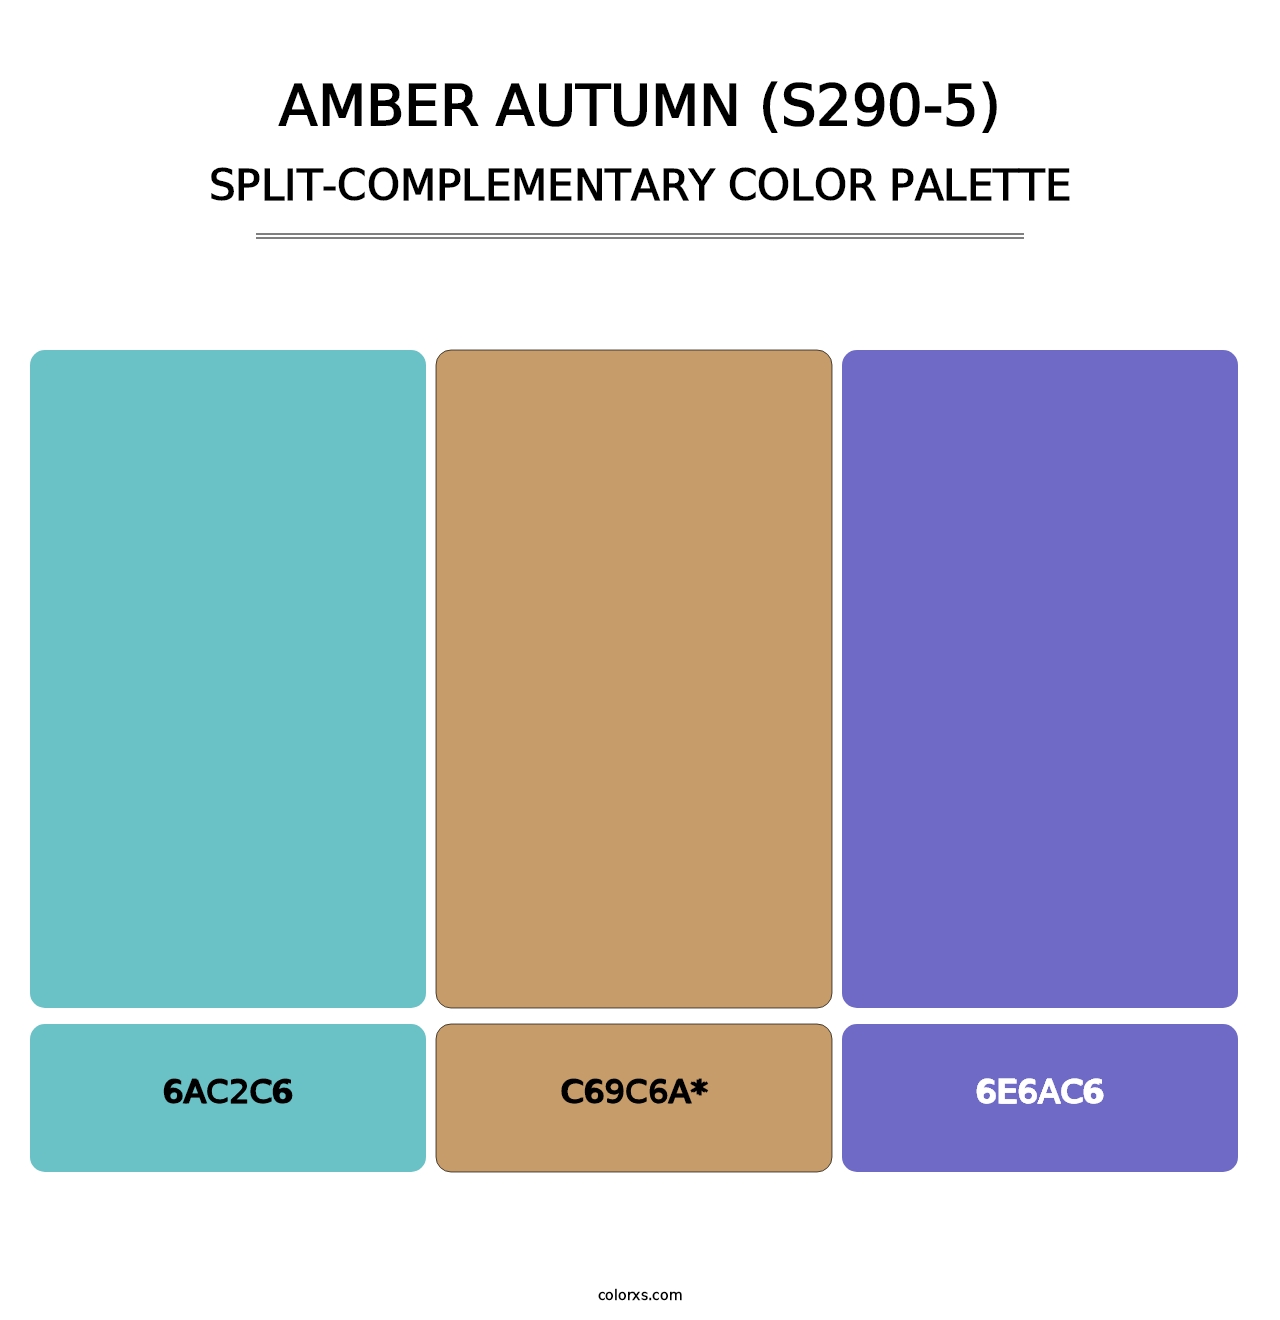 Amber Autumn (S290-5) - Split-Complementary Color Palette